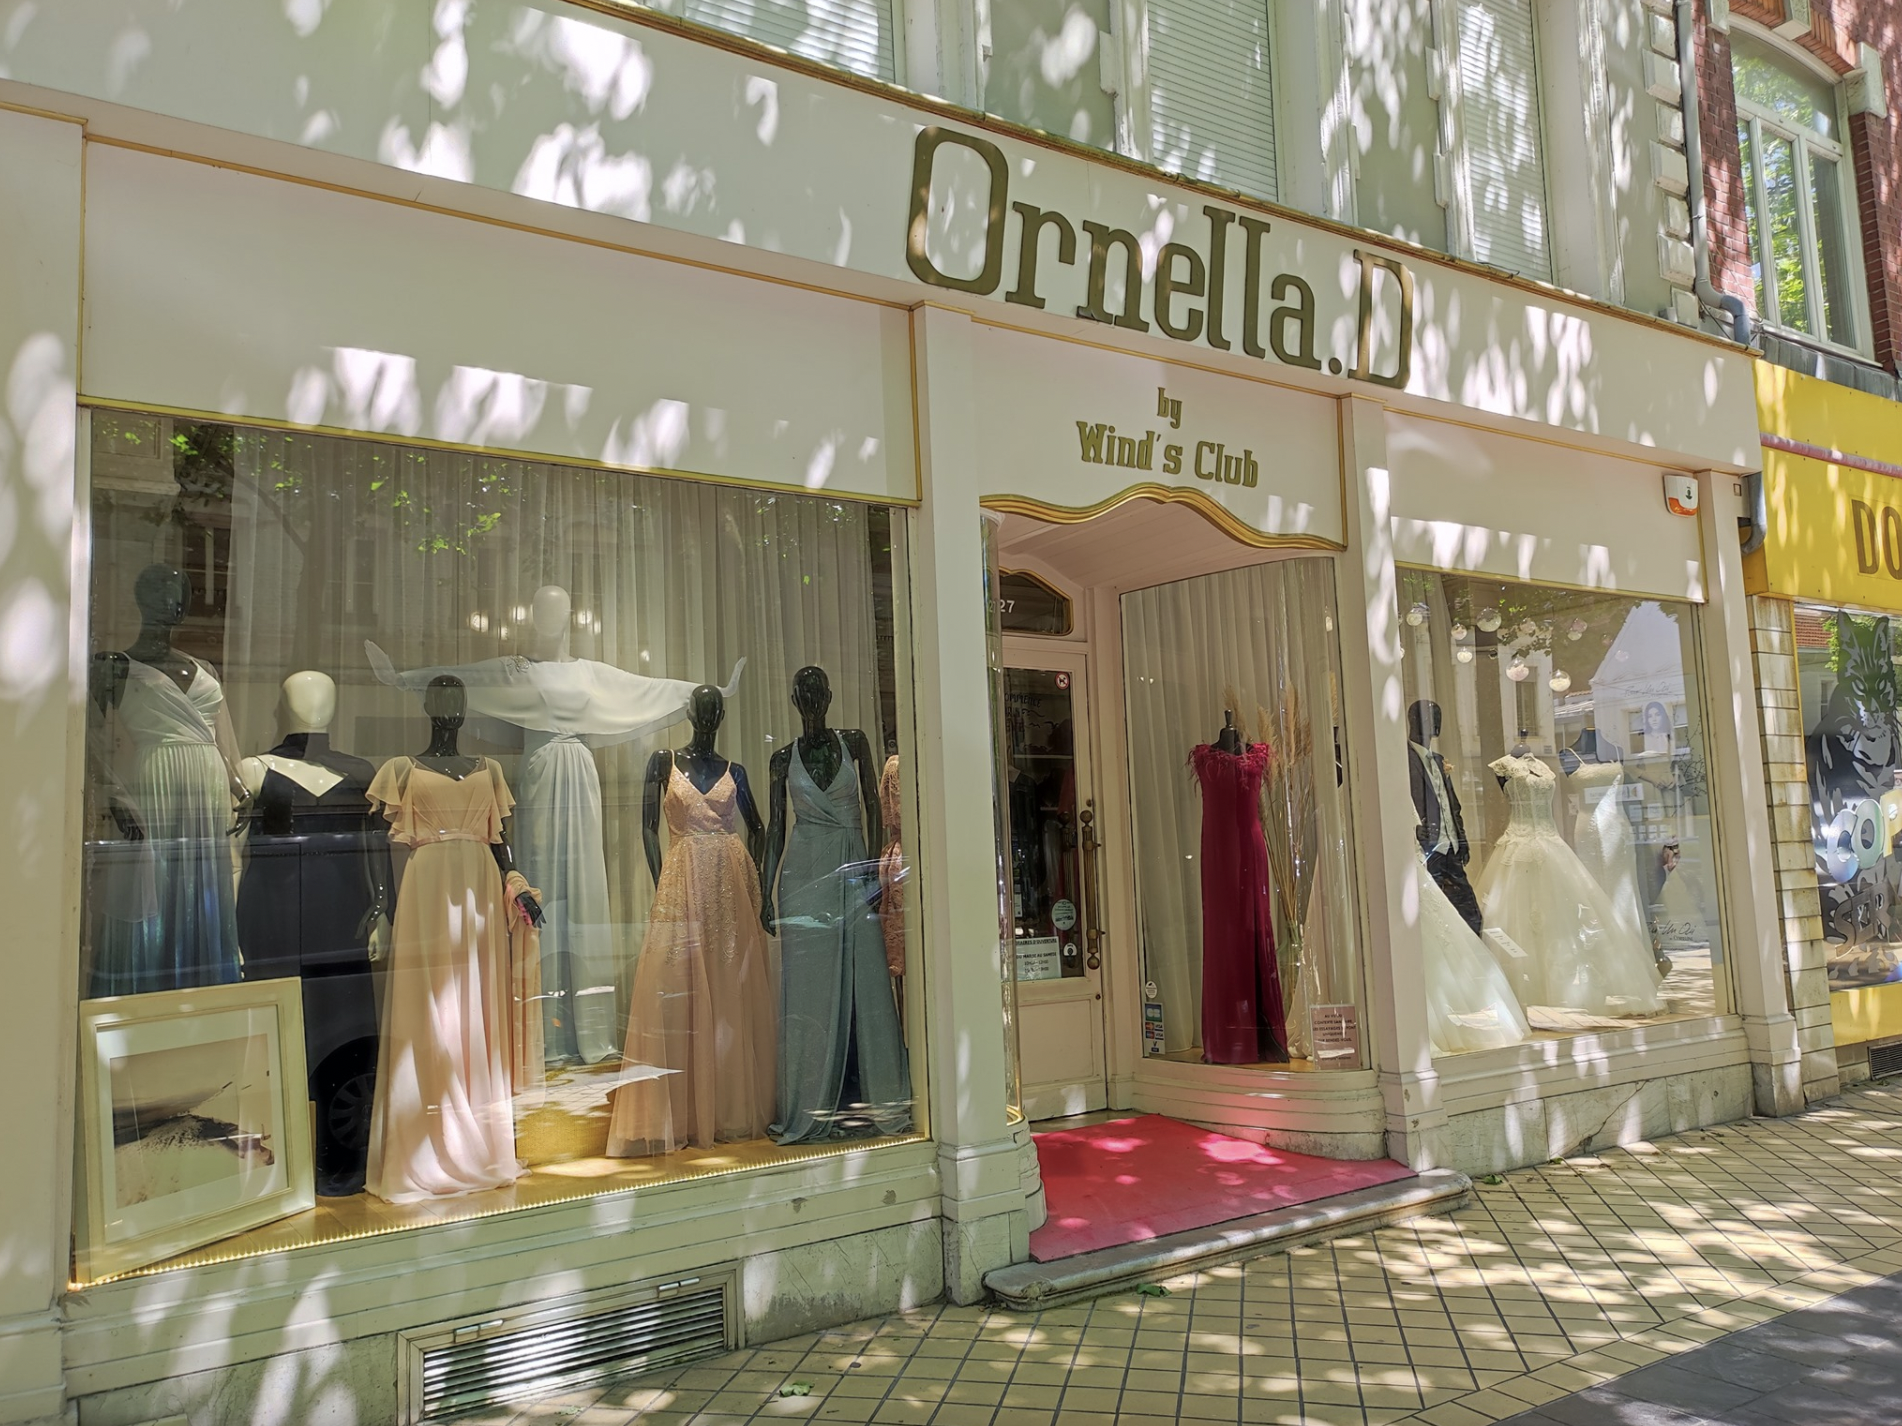 Boutique Ornella D -by Wind's Club Calais